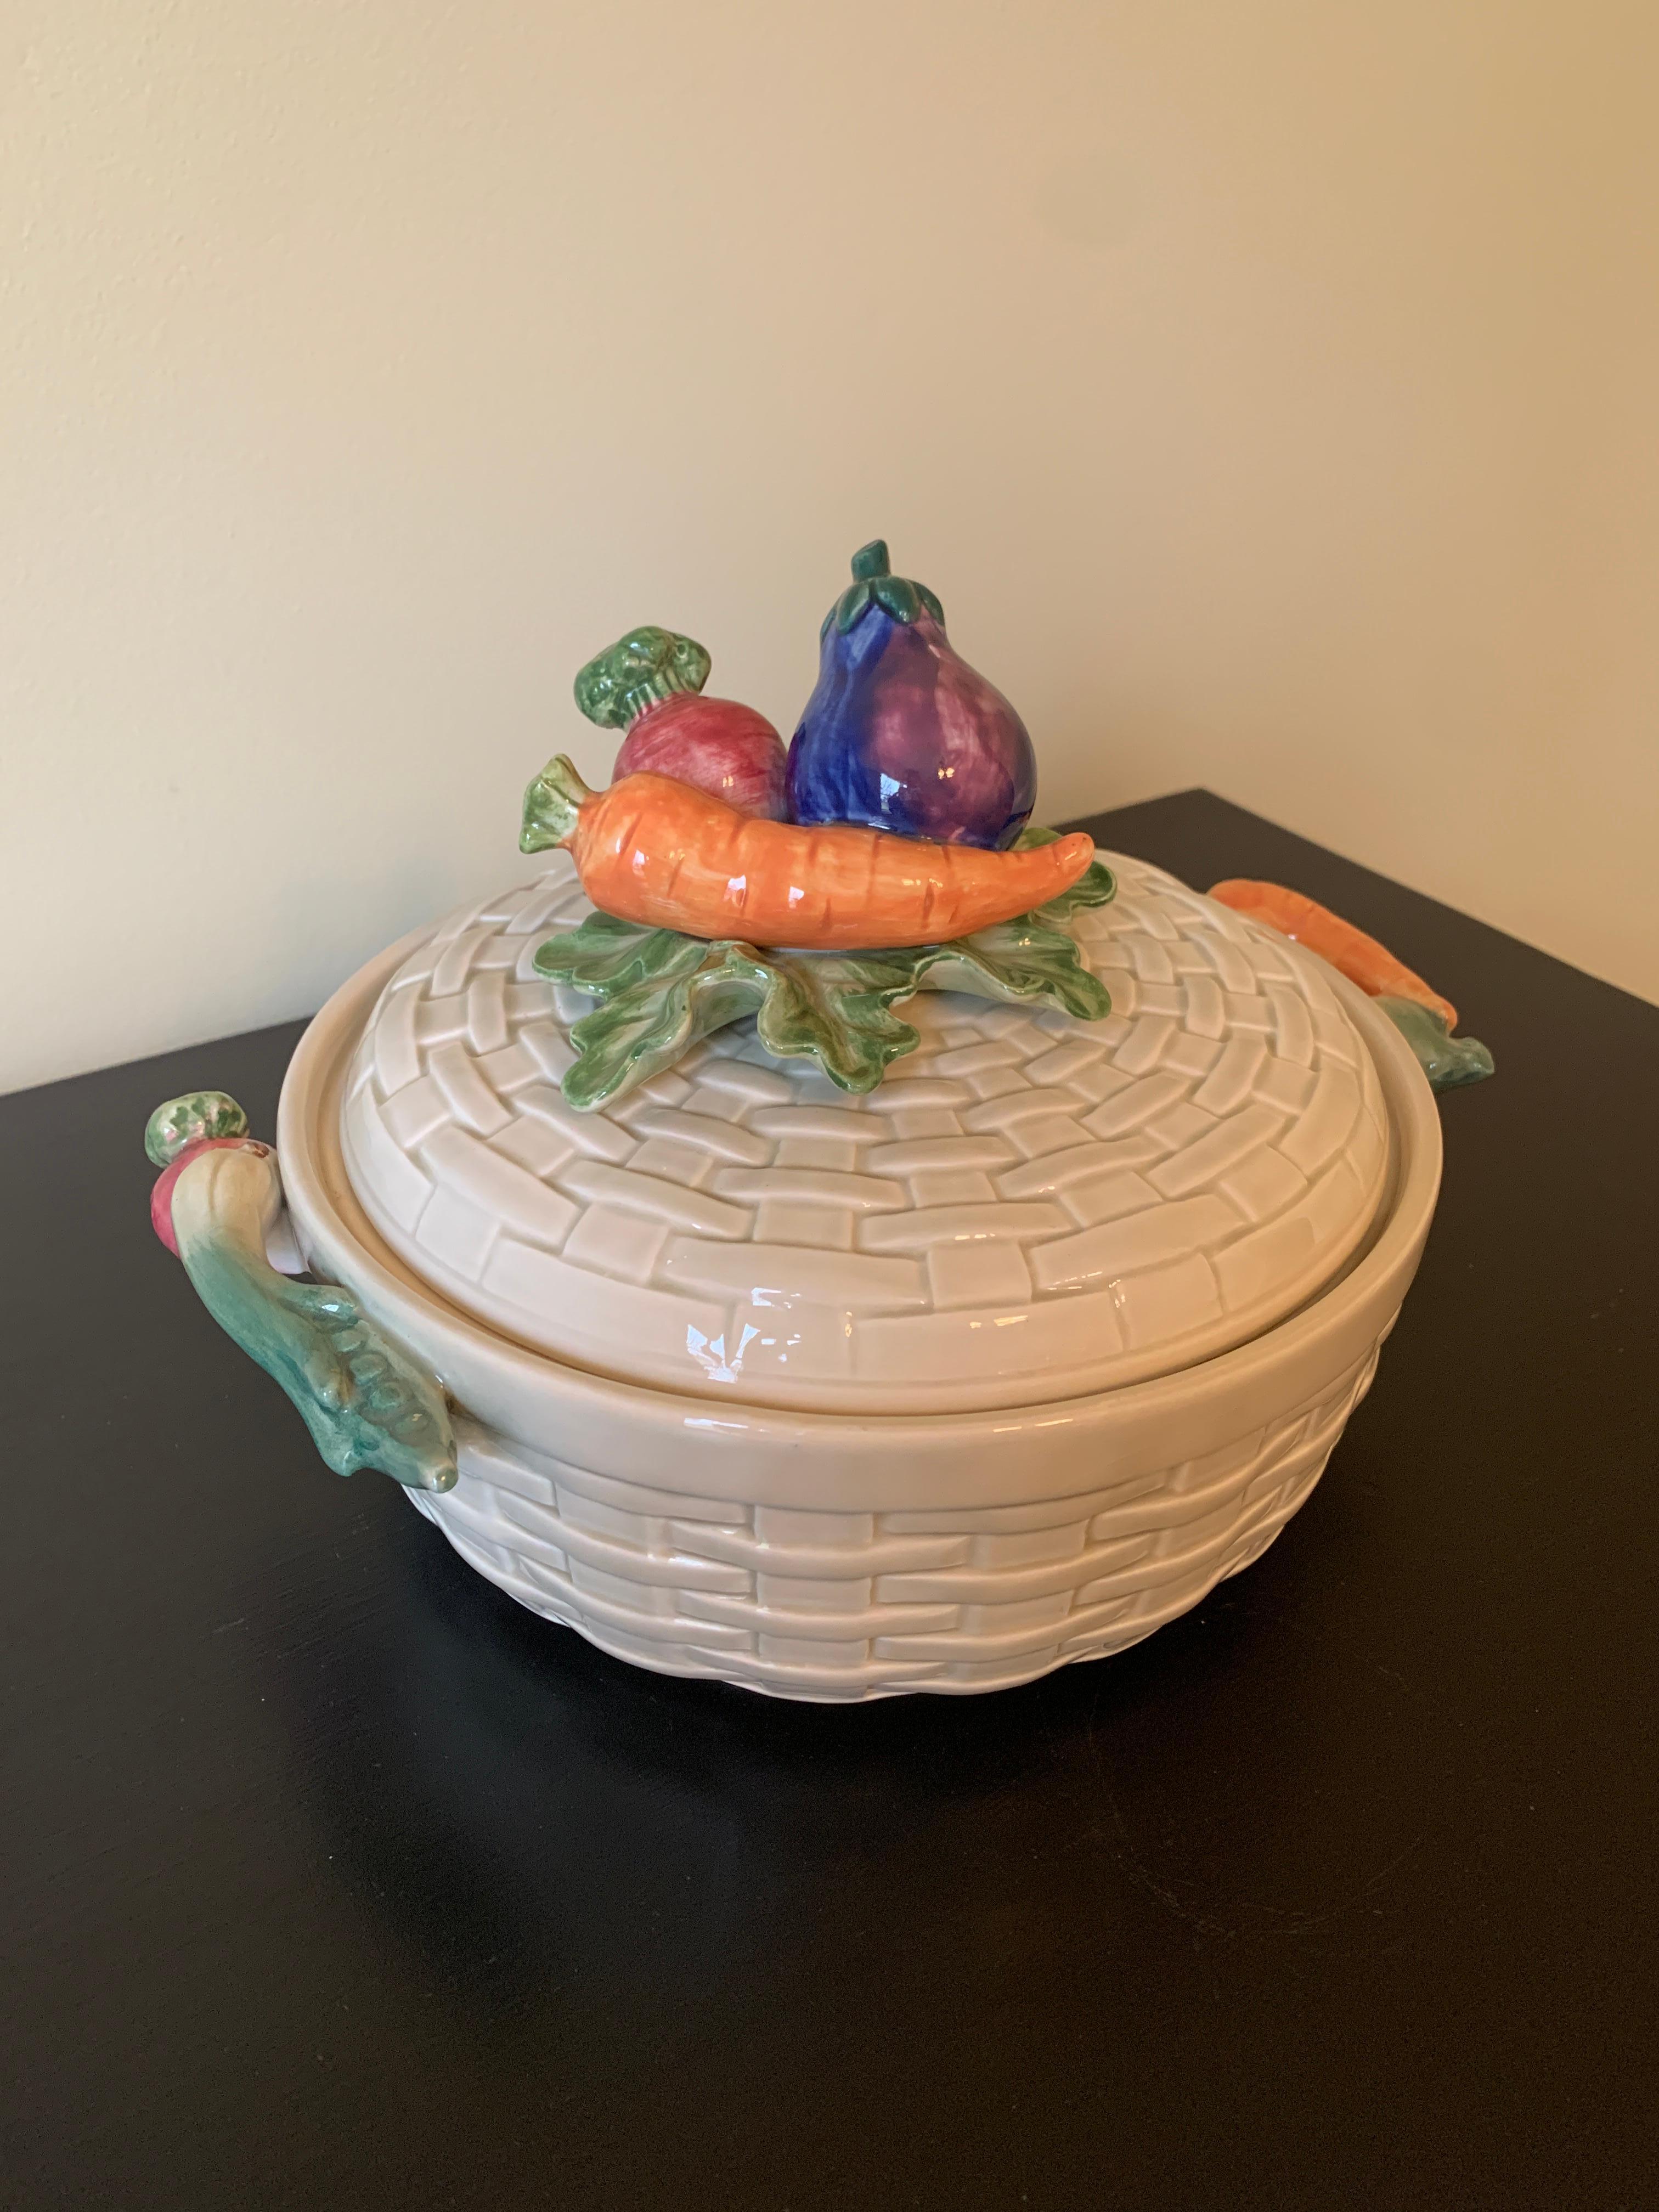 Japanese Fitz & Floyd Glazed Ceramic Trompe l'Oeil Woven Basket With Vegetables Casserole For Sale